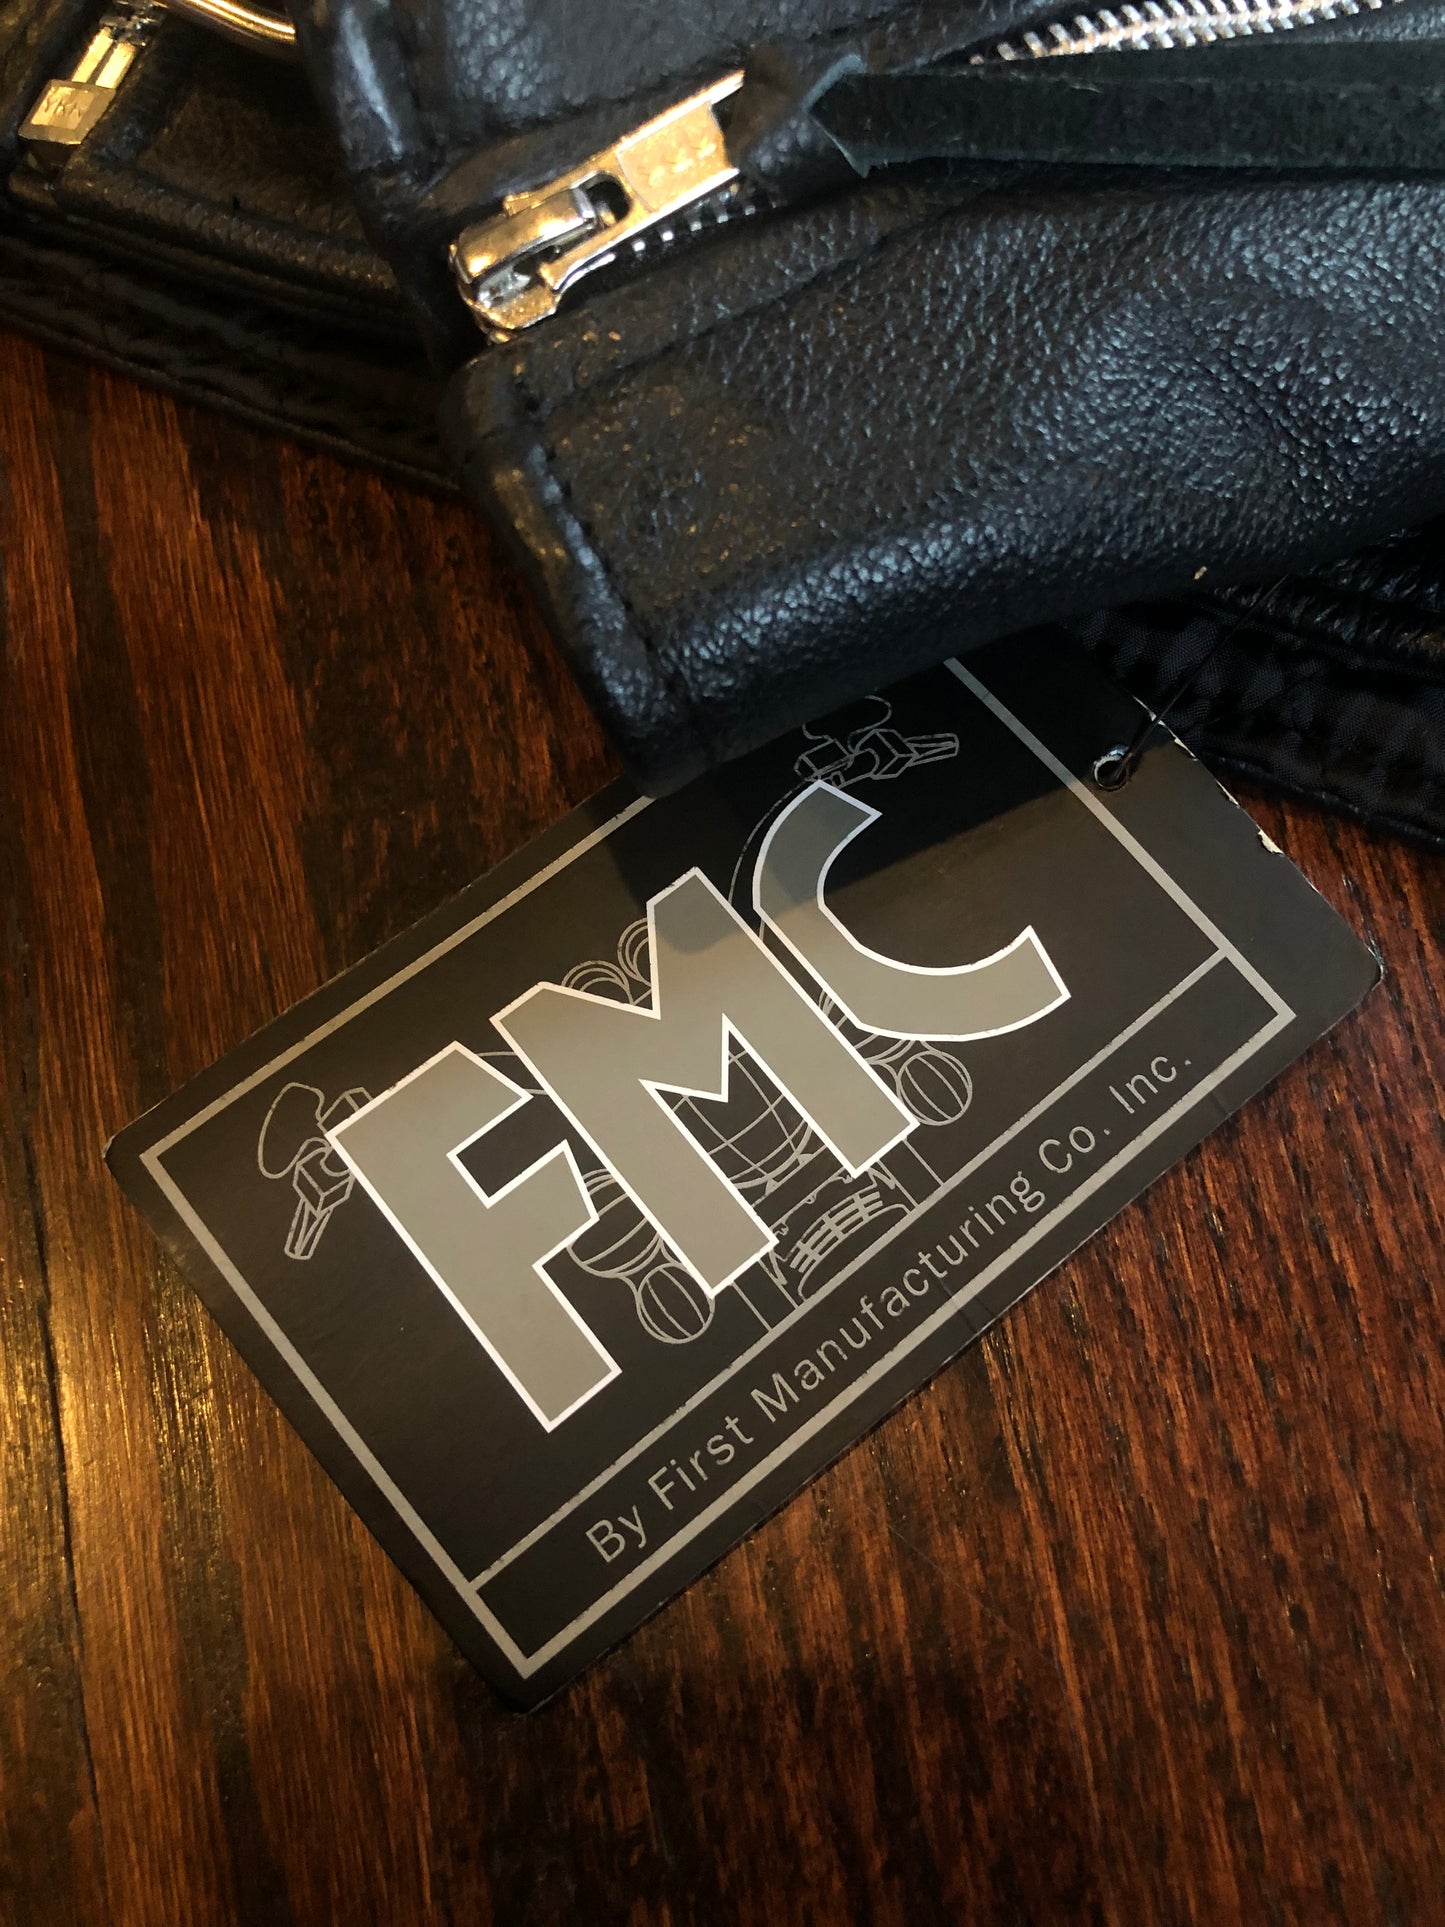 Vintage FMC Classic Black Leather Motorcycle Jacket